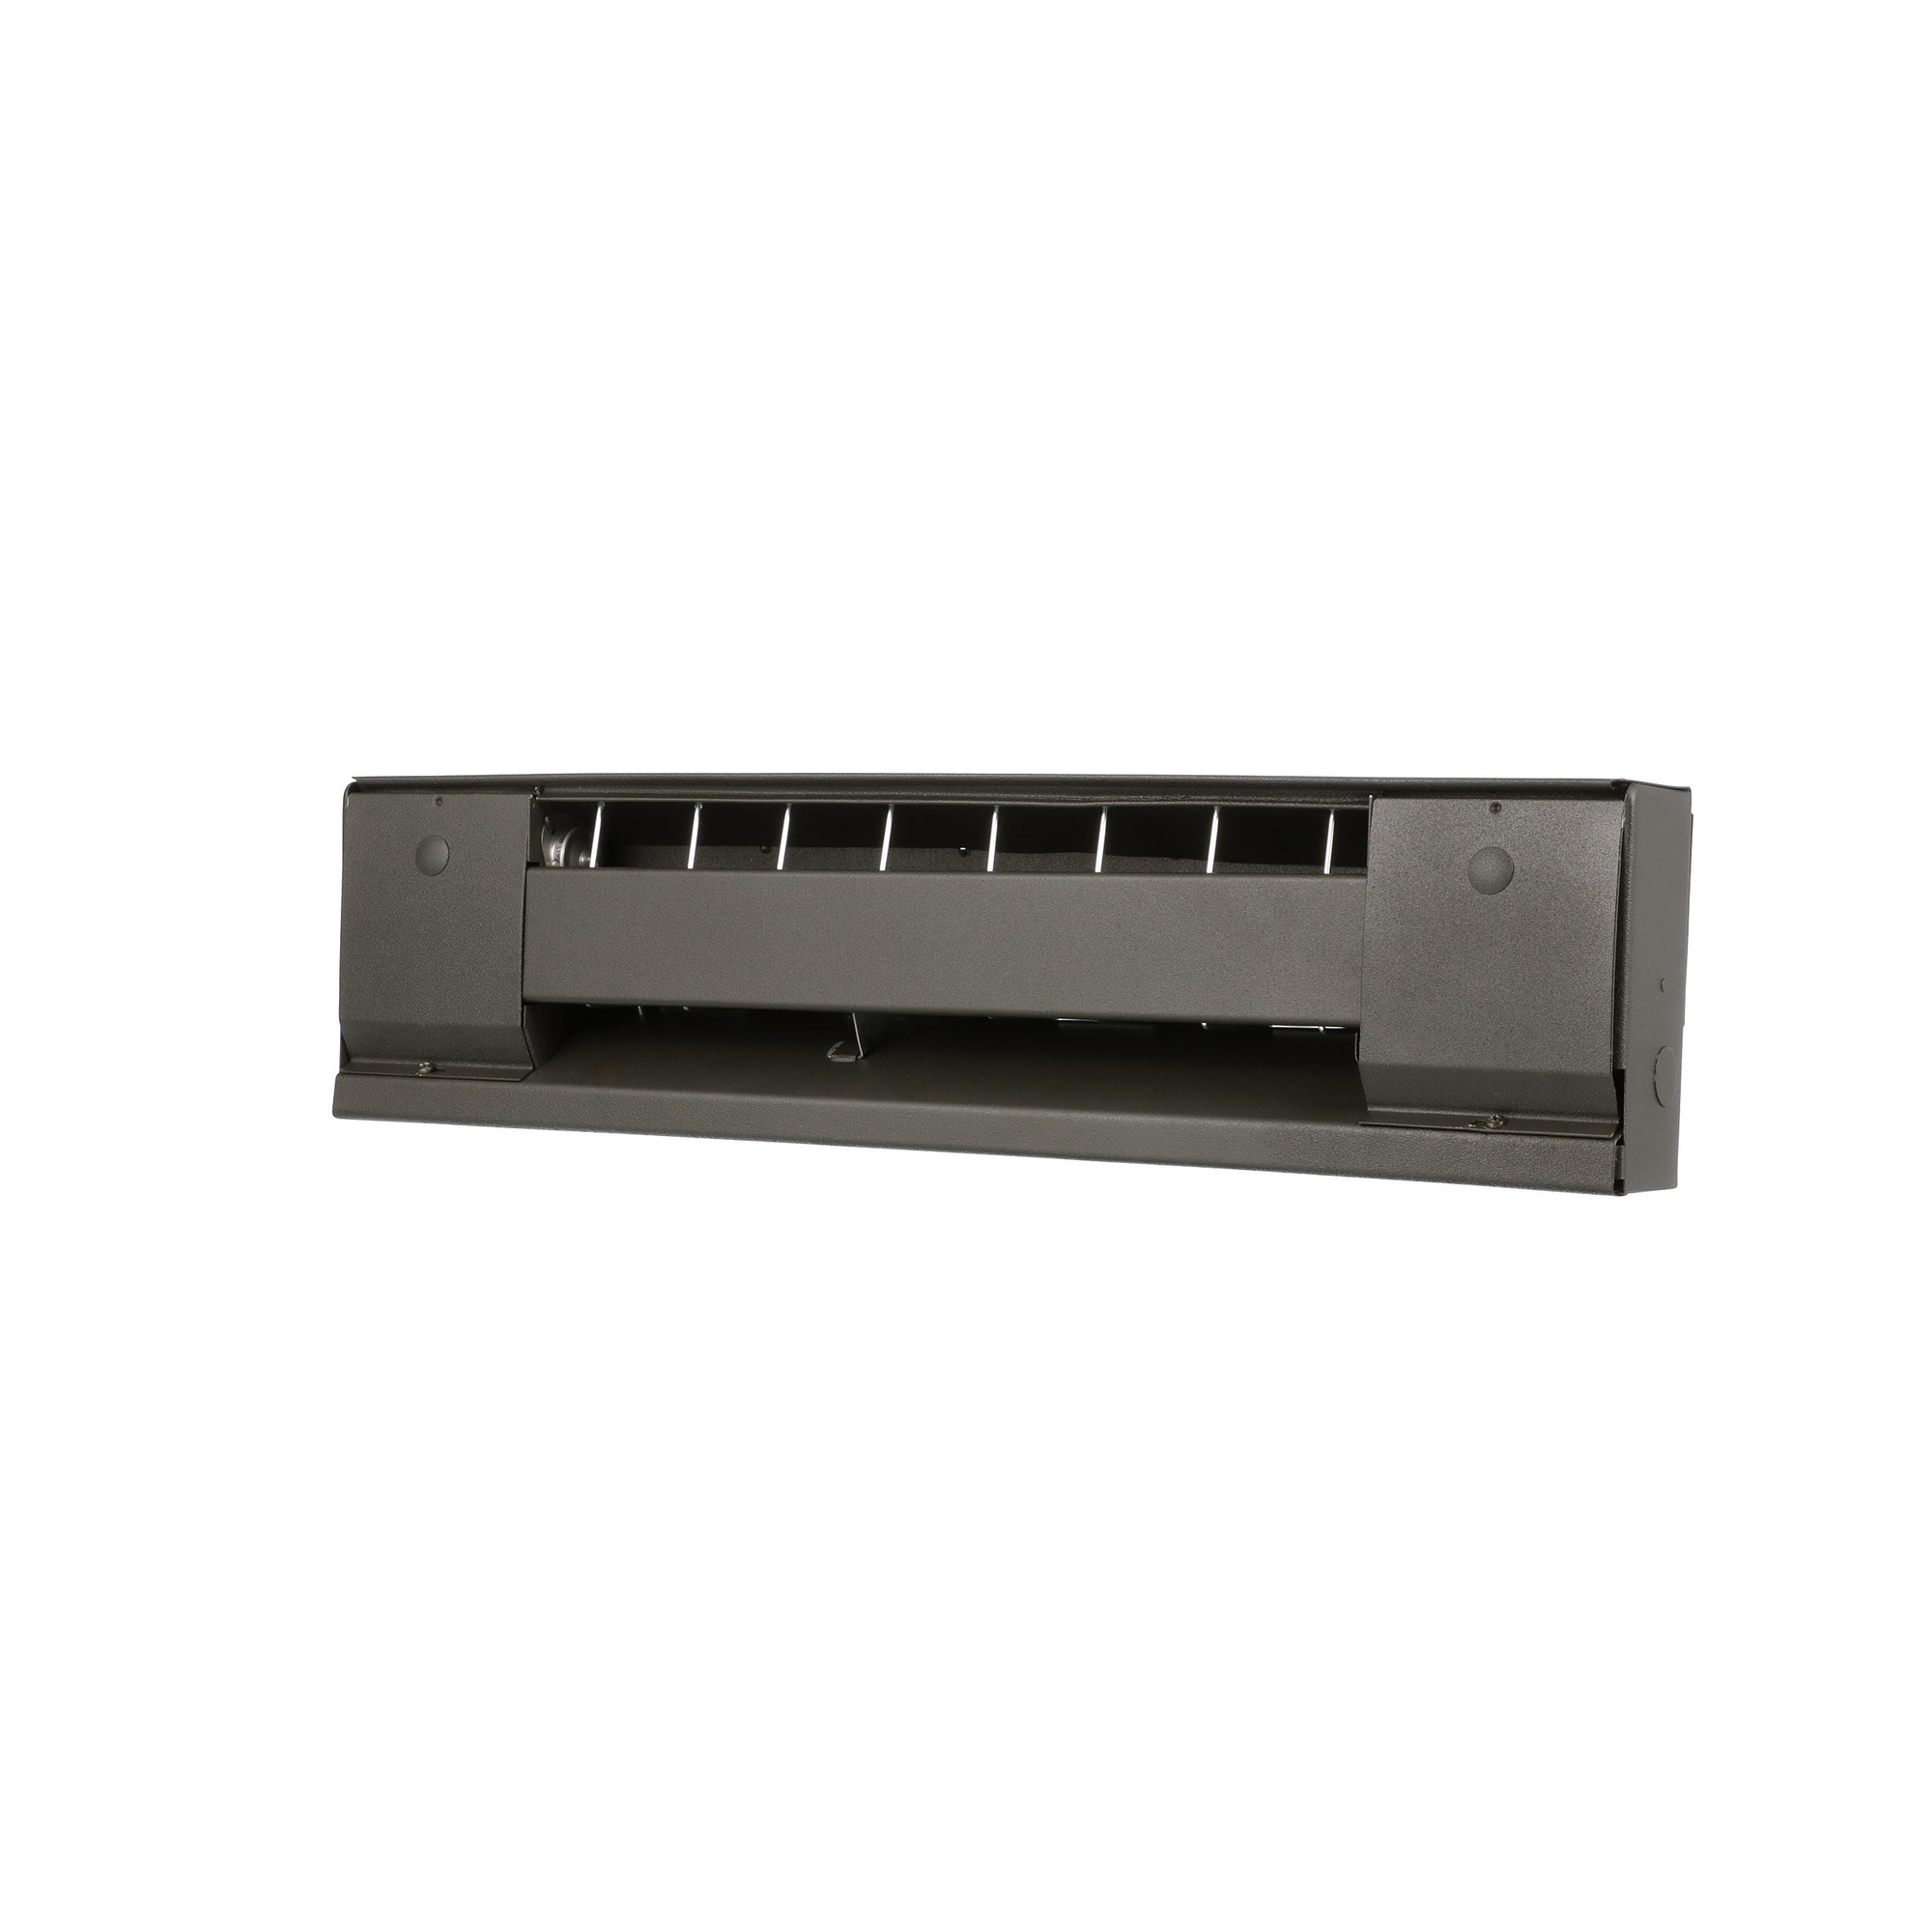 TPI Markel, Baseboard Electric Heater, Model E2903024C